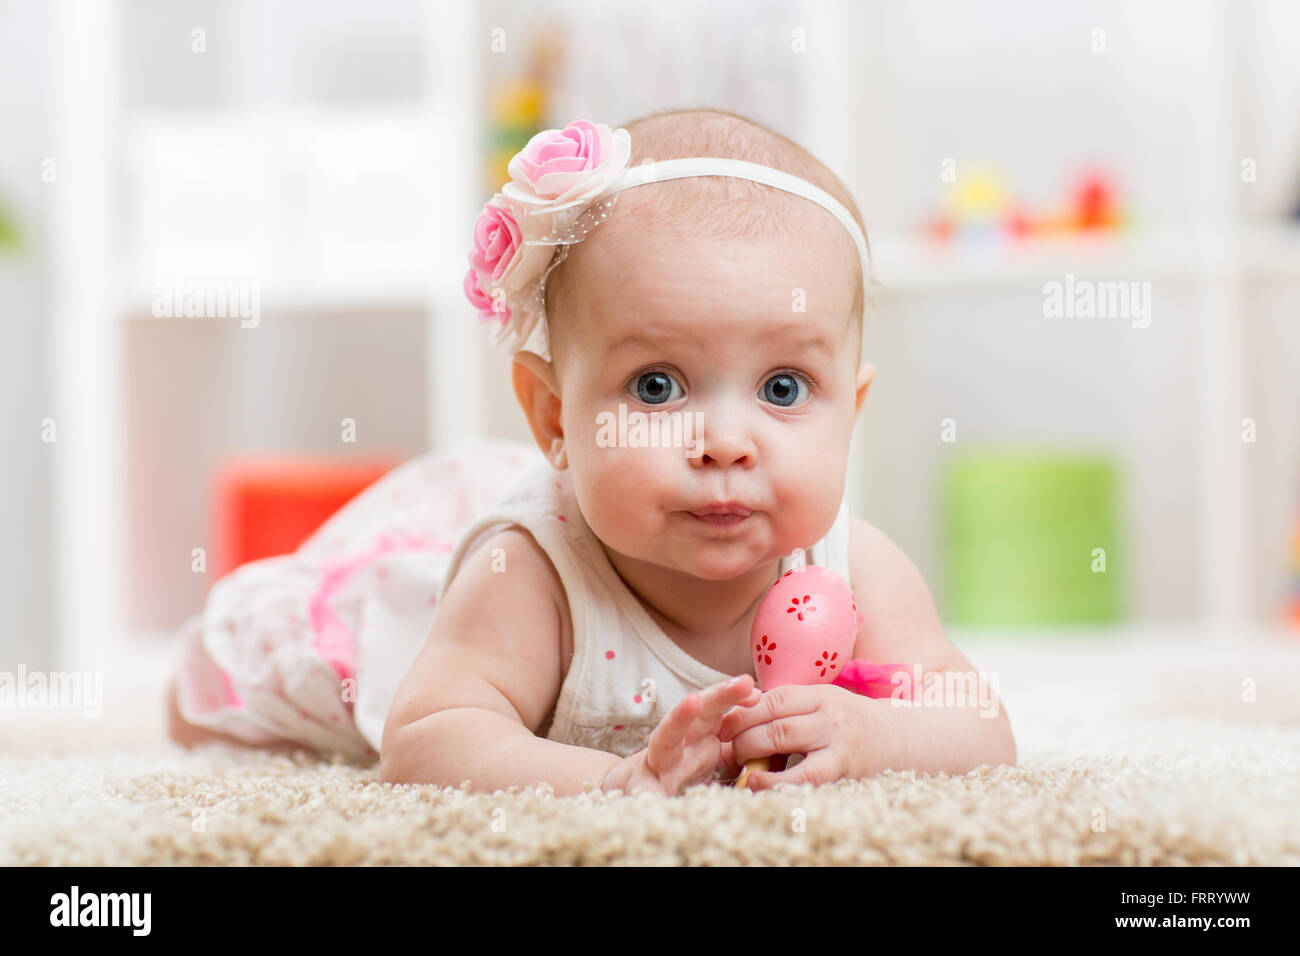 Portrait of adorable baby girl lying on fluffy carpet Stock Photo